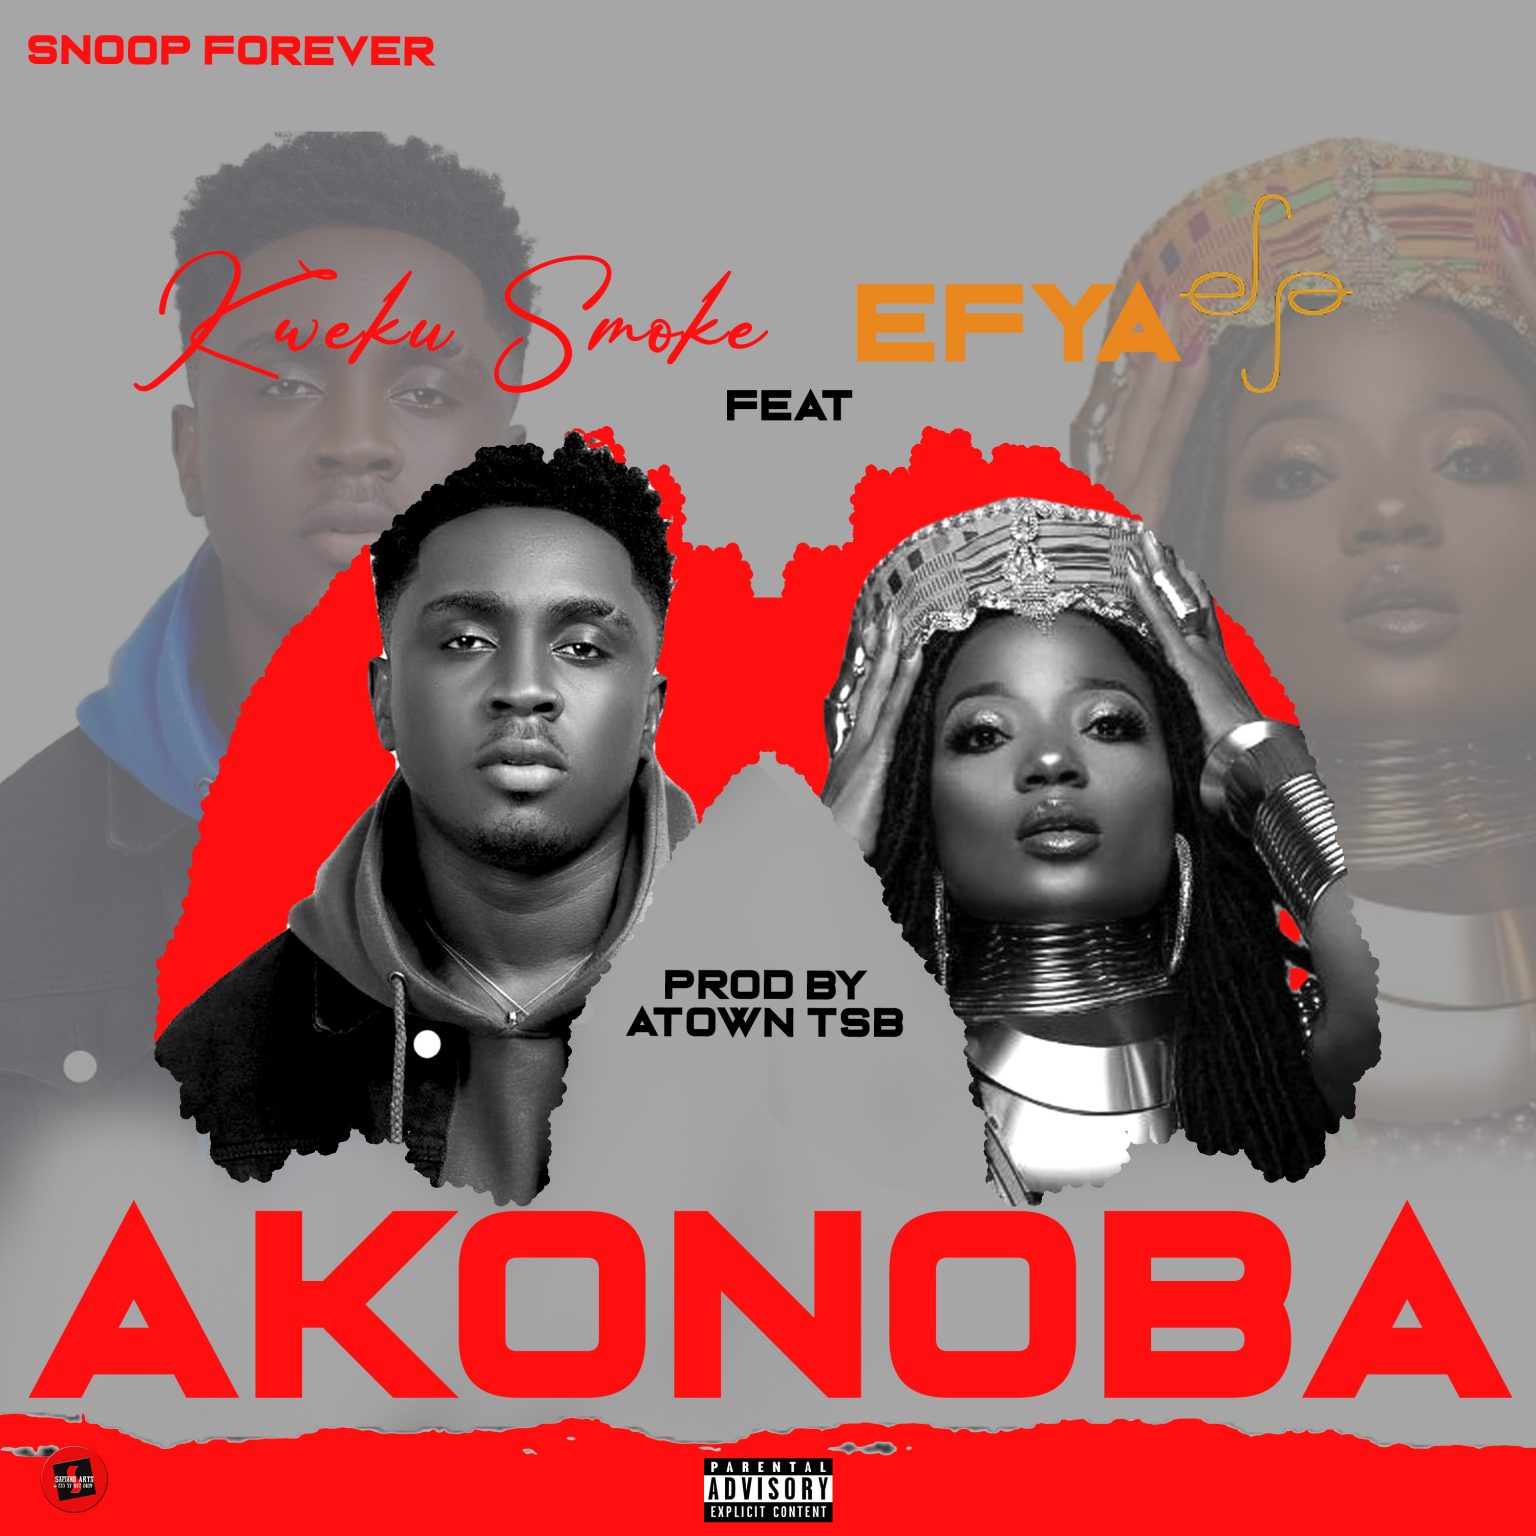 Kweku Smoke - Akonoba ft. Efya